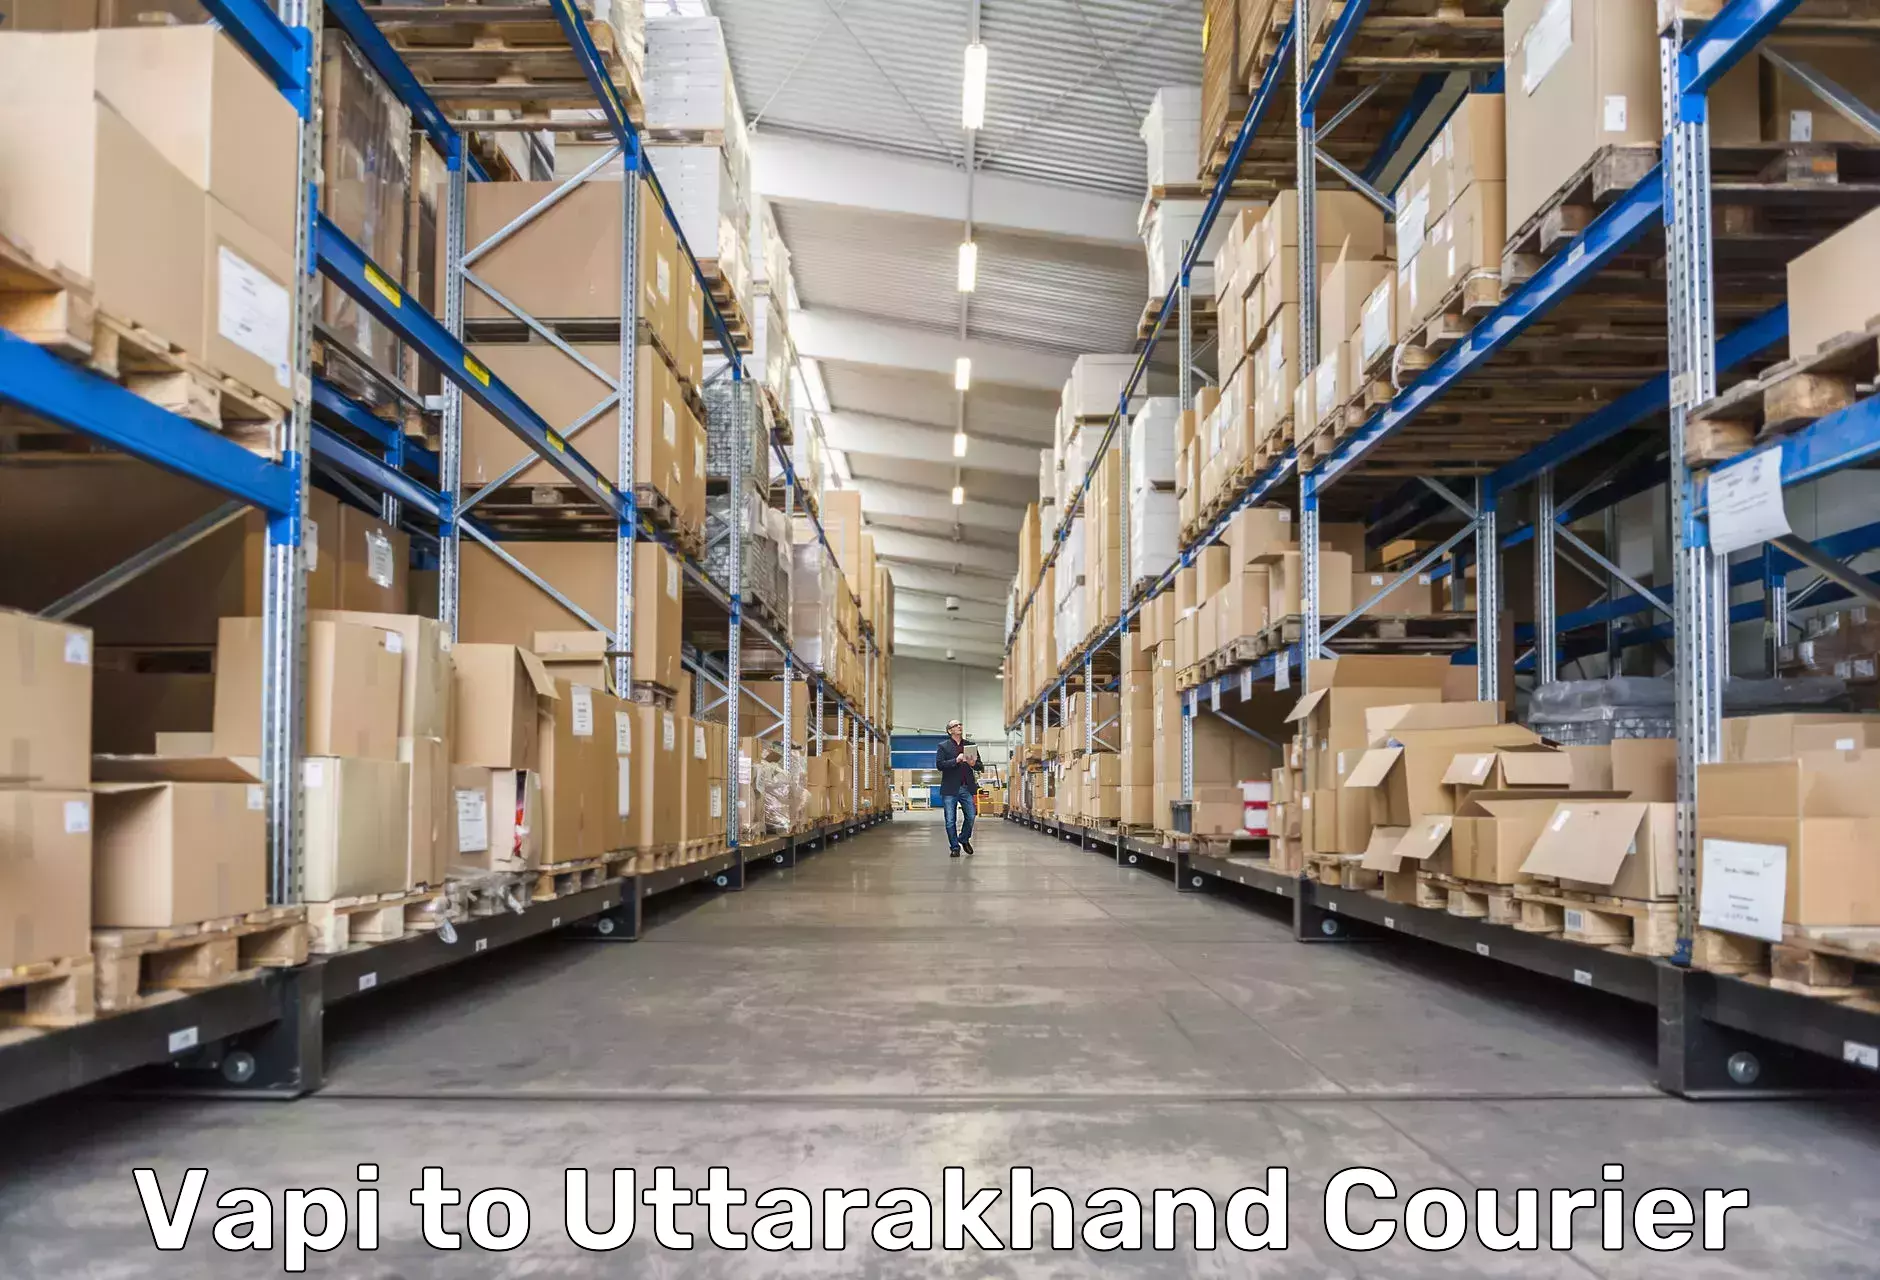 High-performance logistics Vapi to Uttarakhand